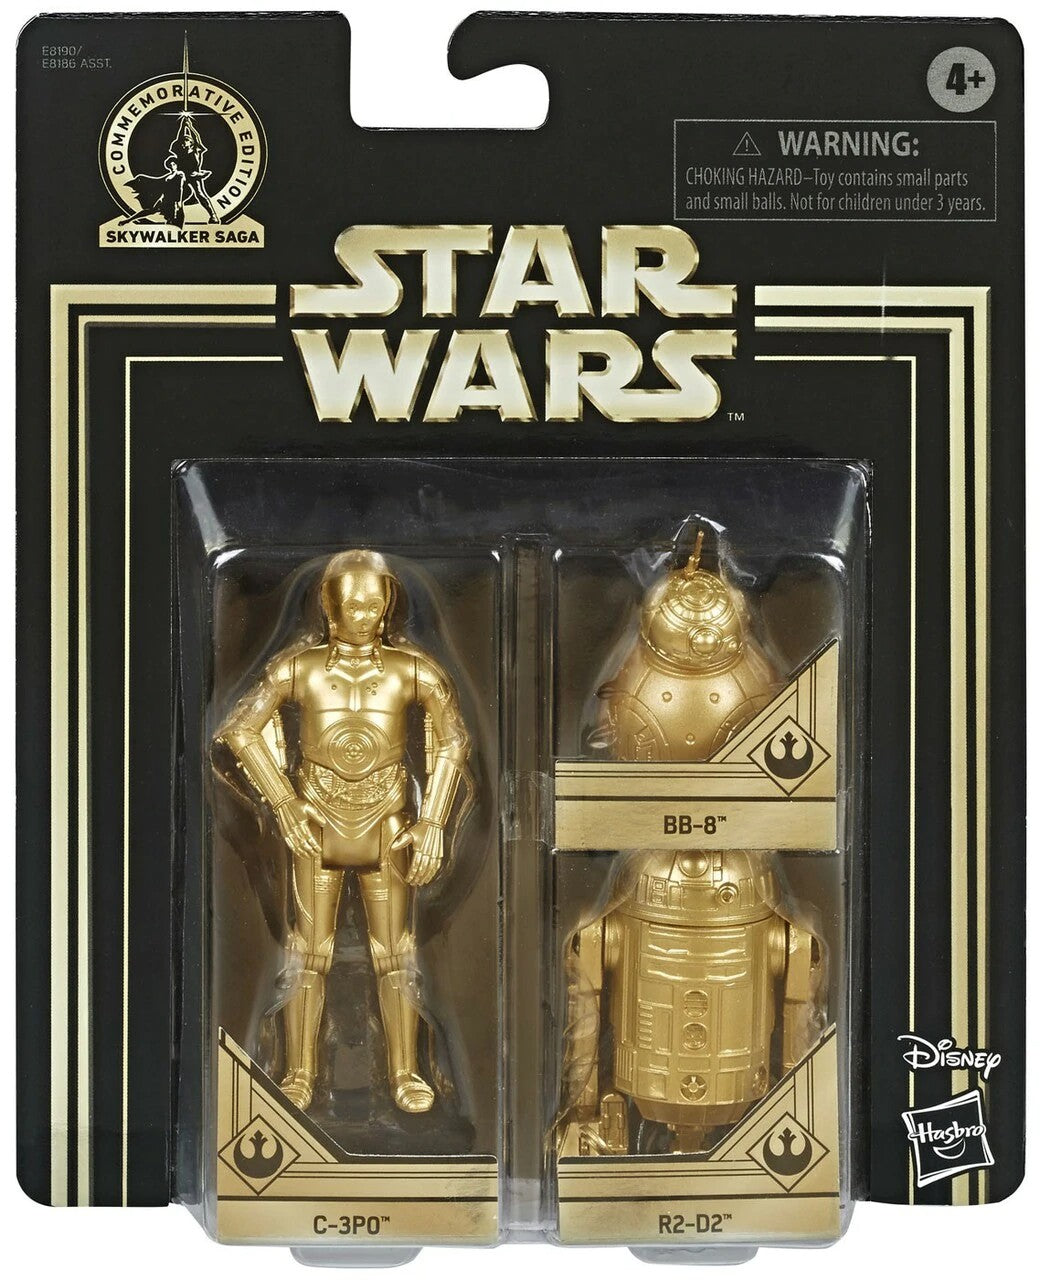 Star Wars: Skywalker Saga Figures (Commemorative Edition)